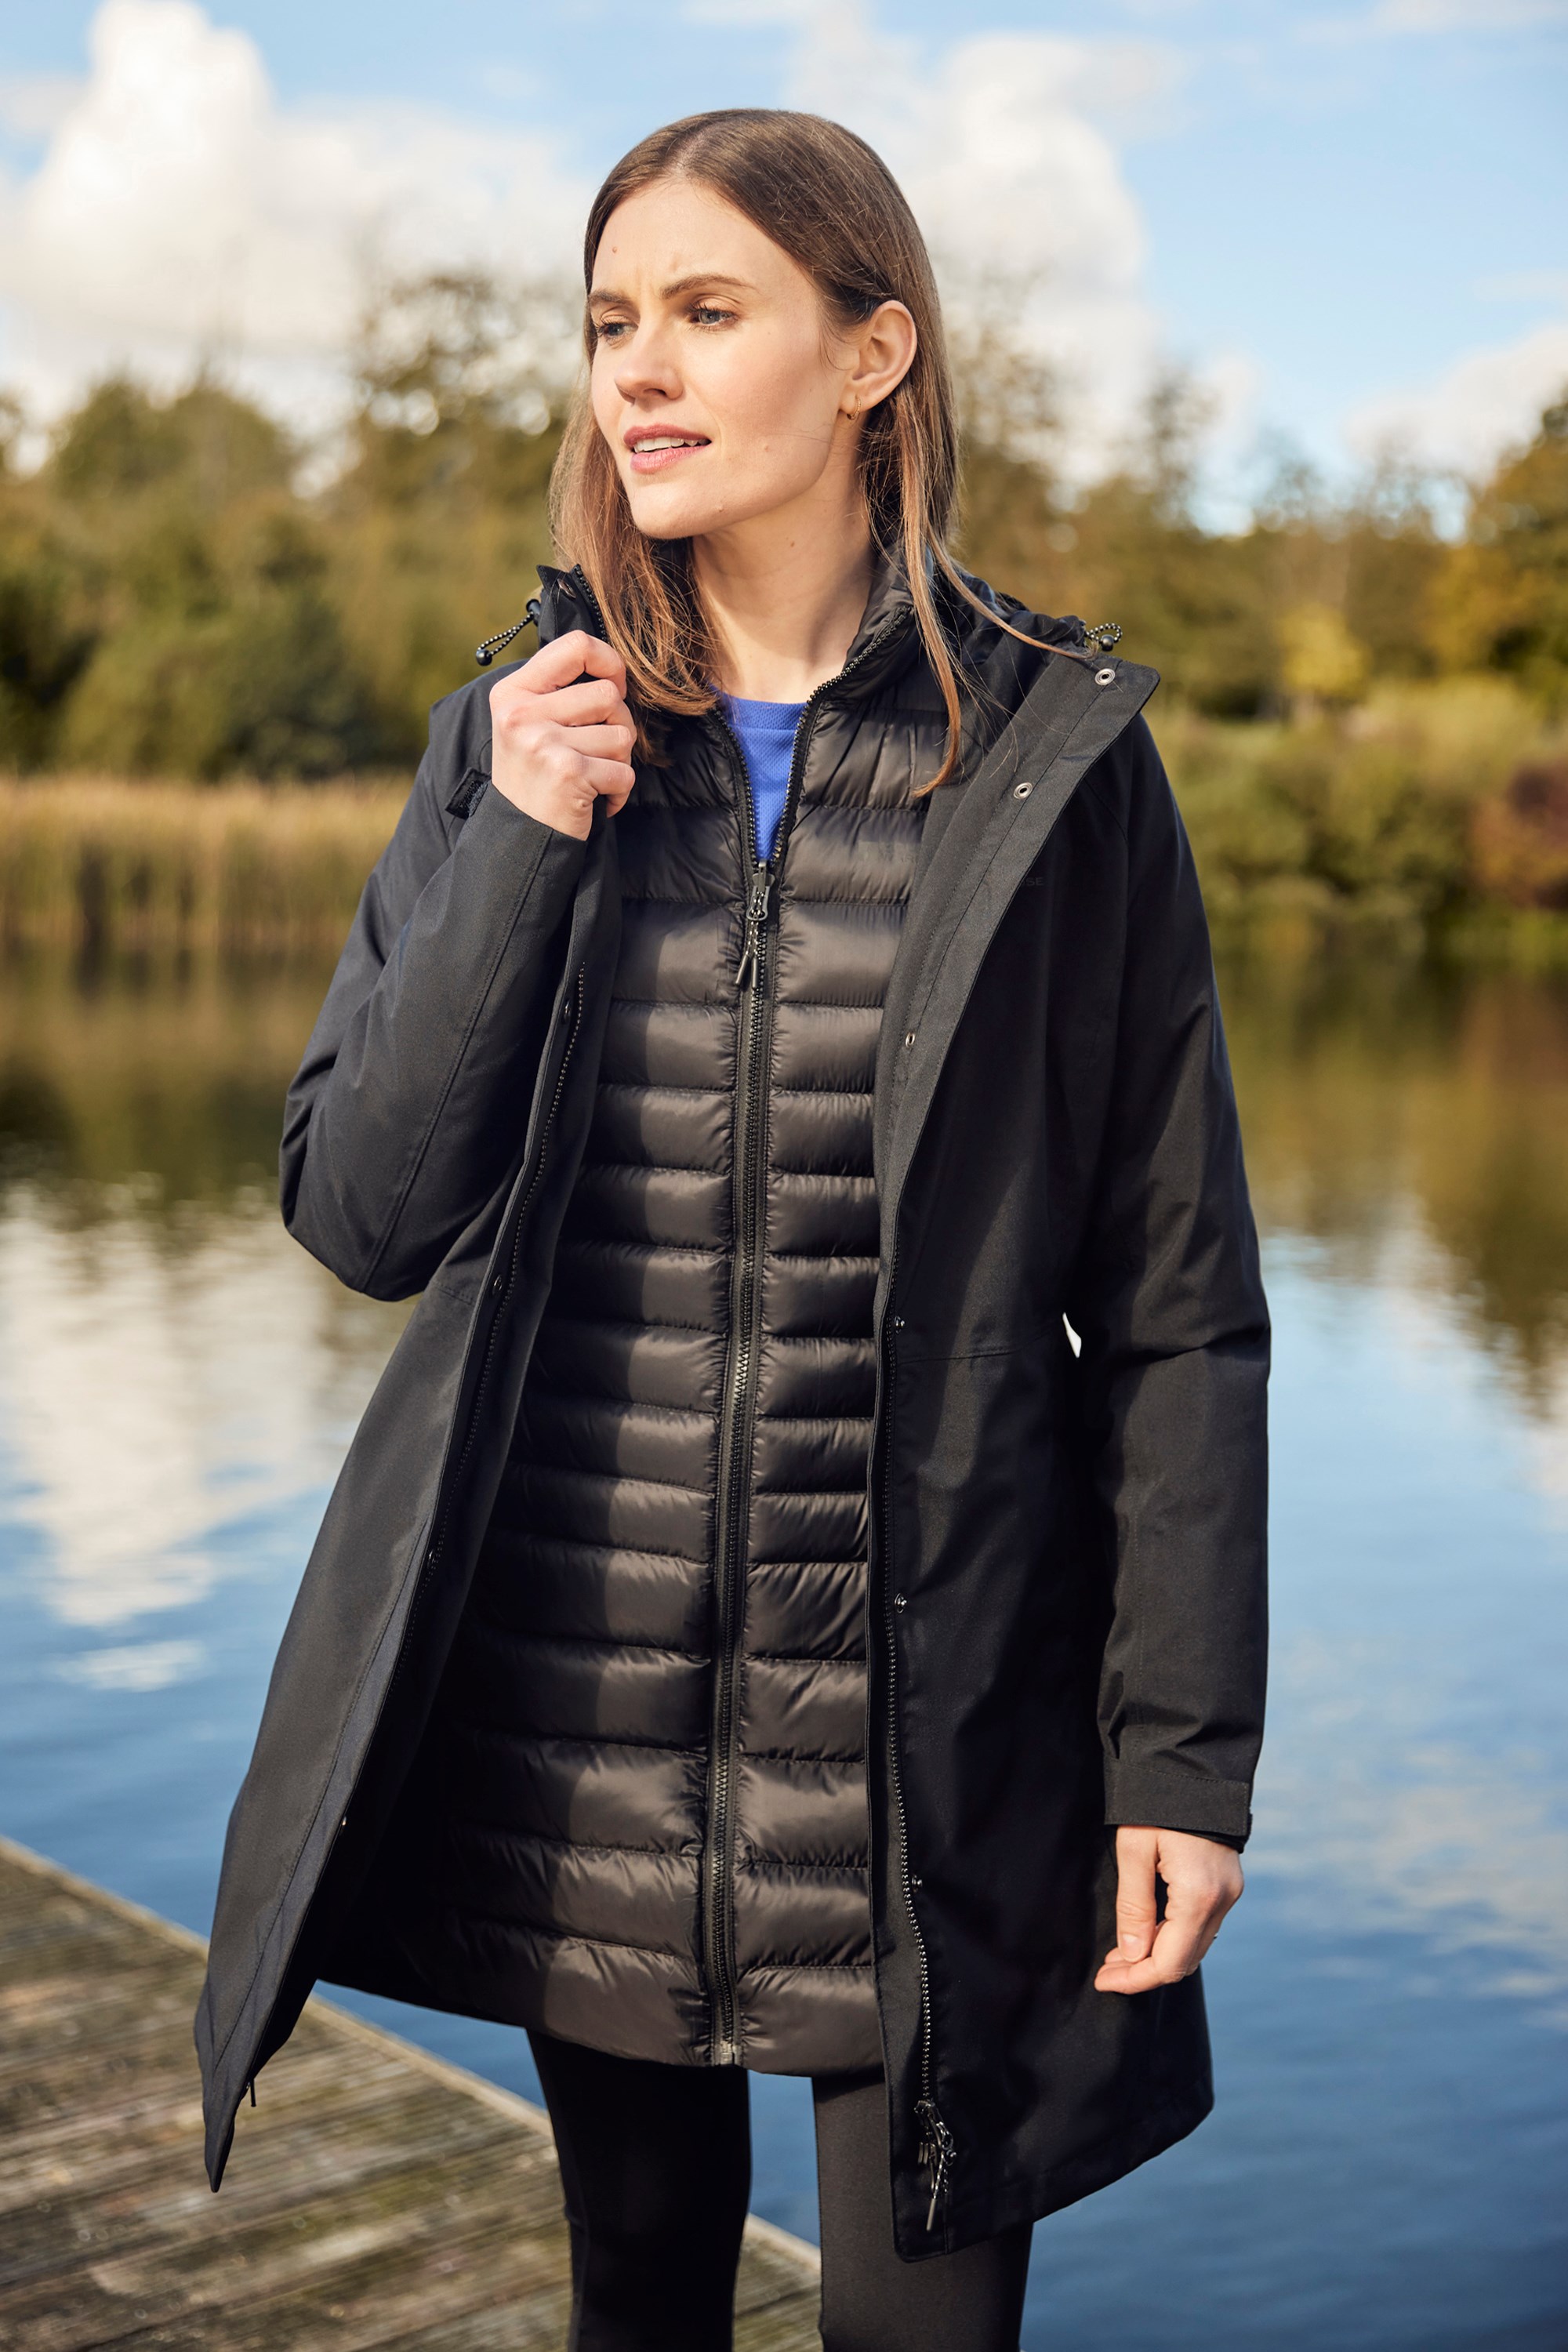 Winter Coats for Women, Winter Warm Fleece Coat with Pockets